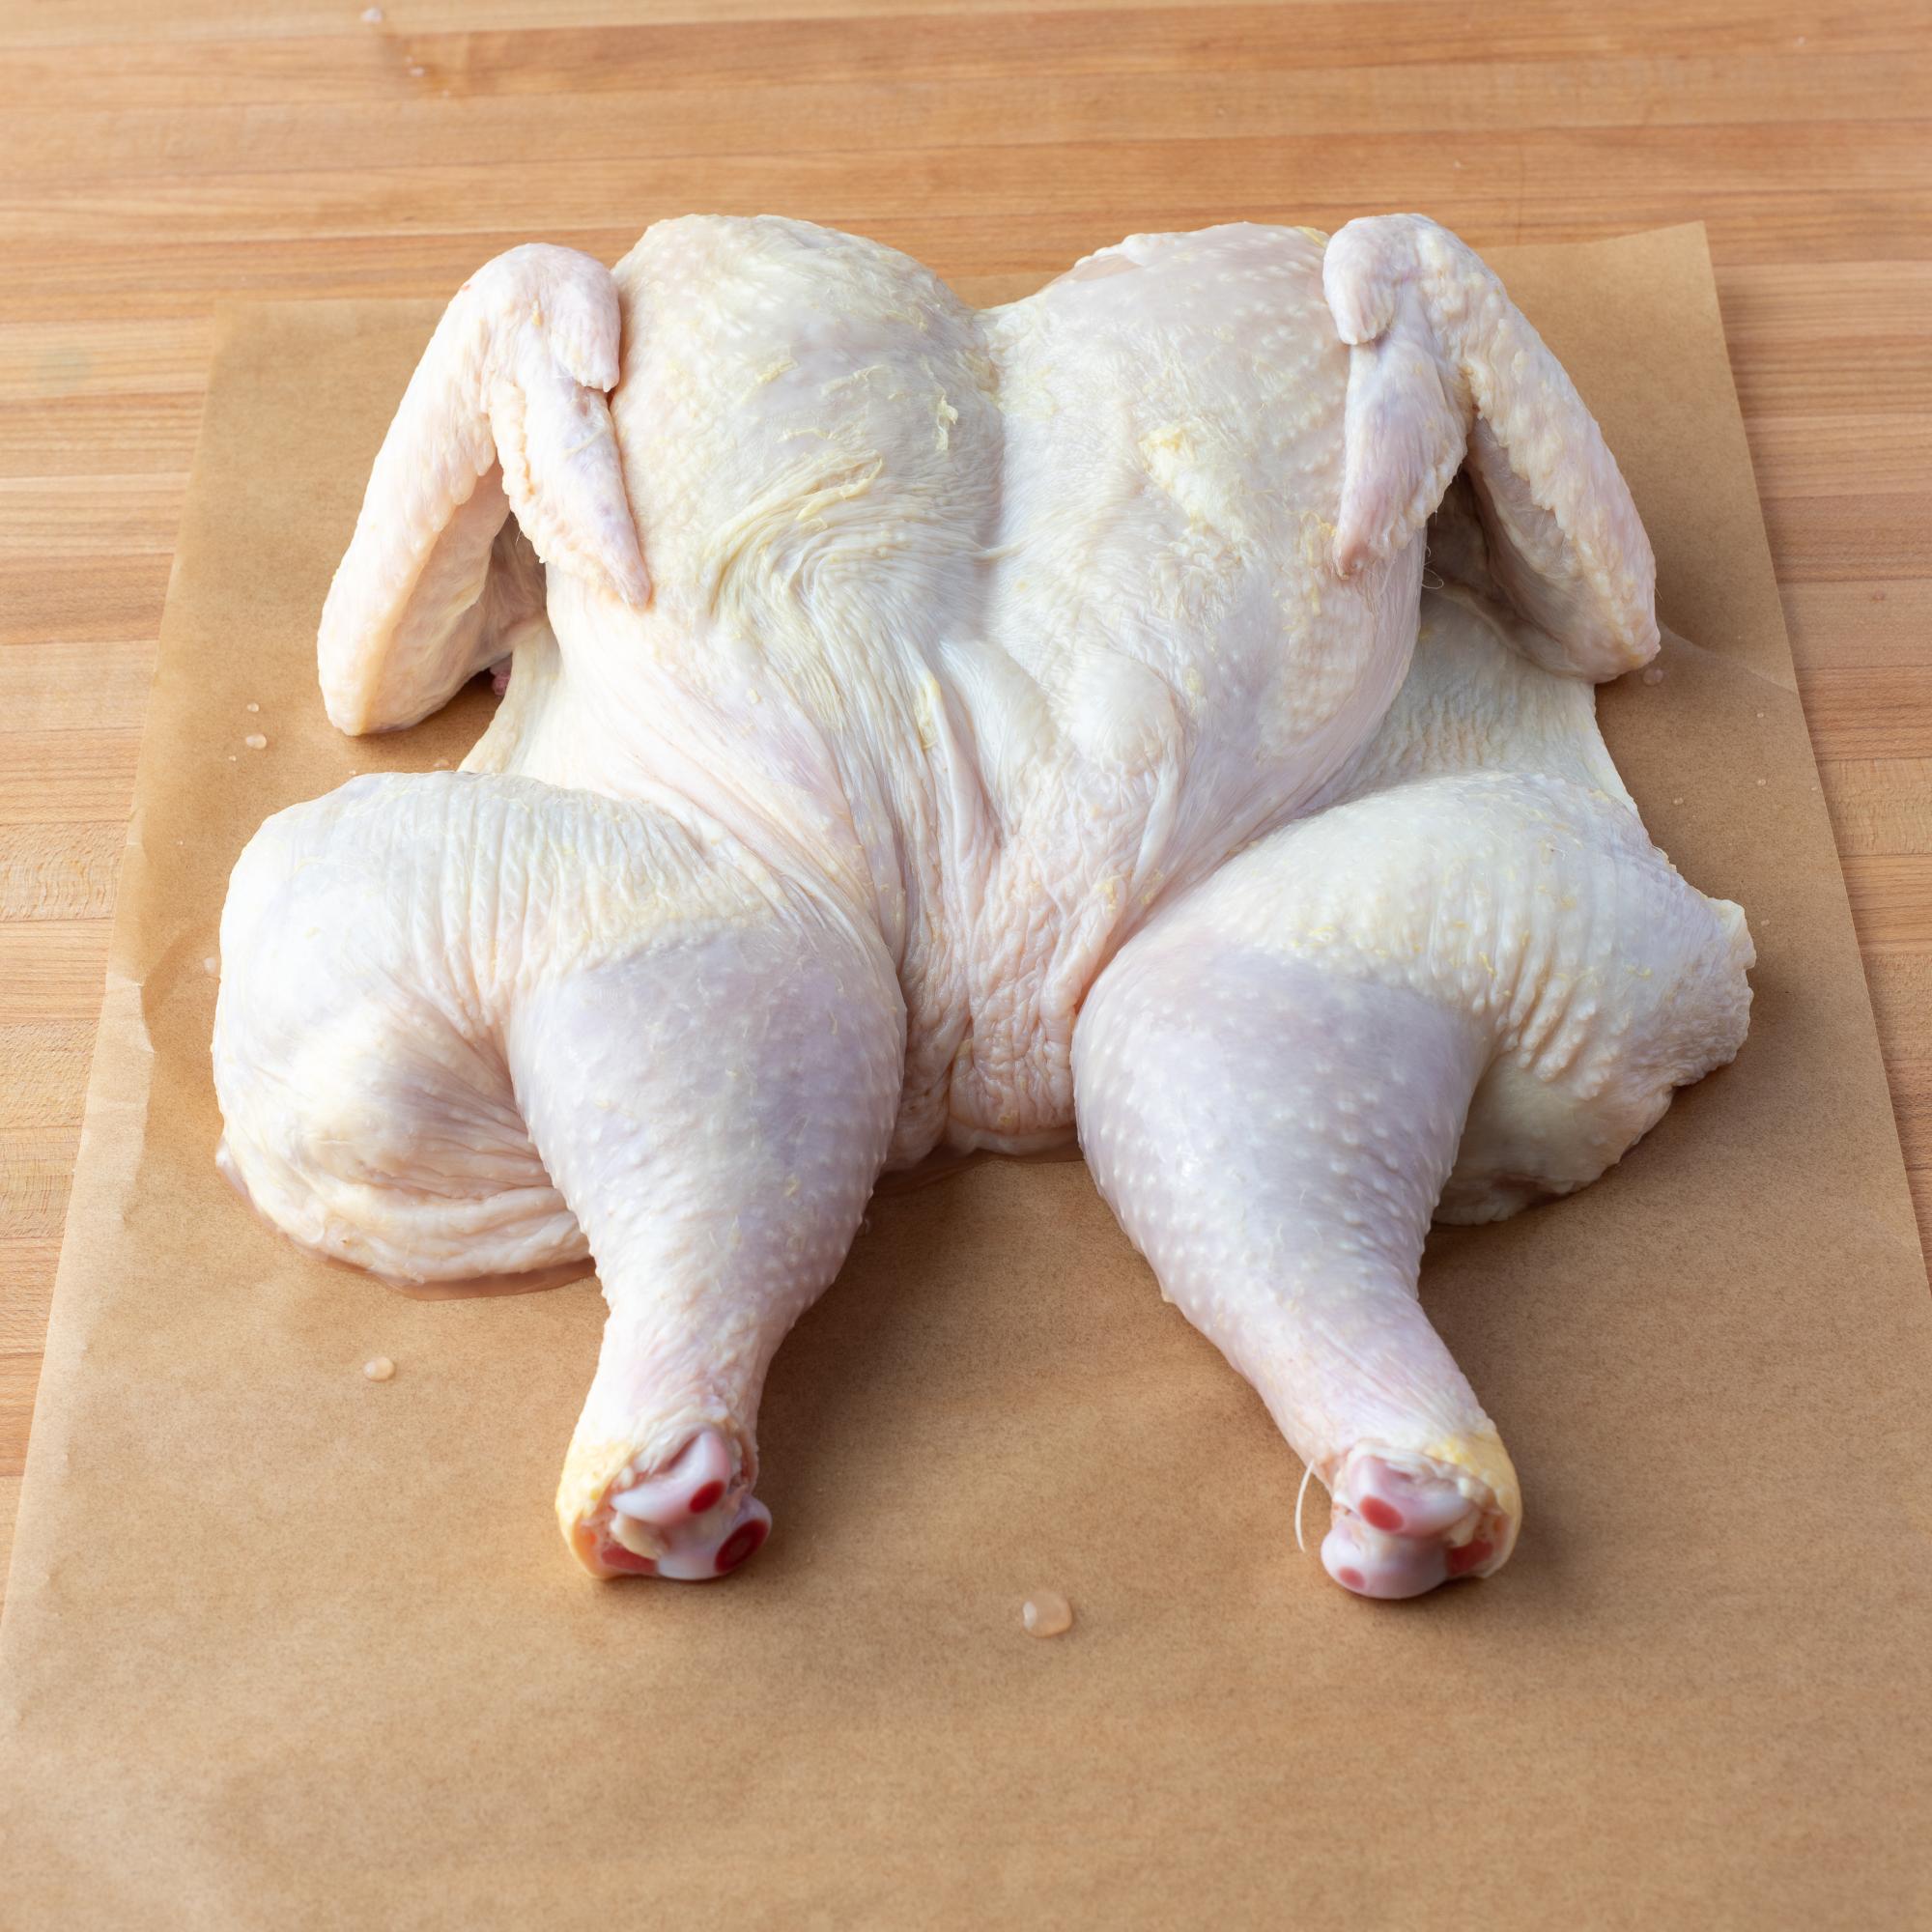 Spatchcocked chicken.